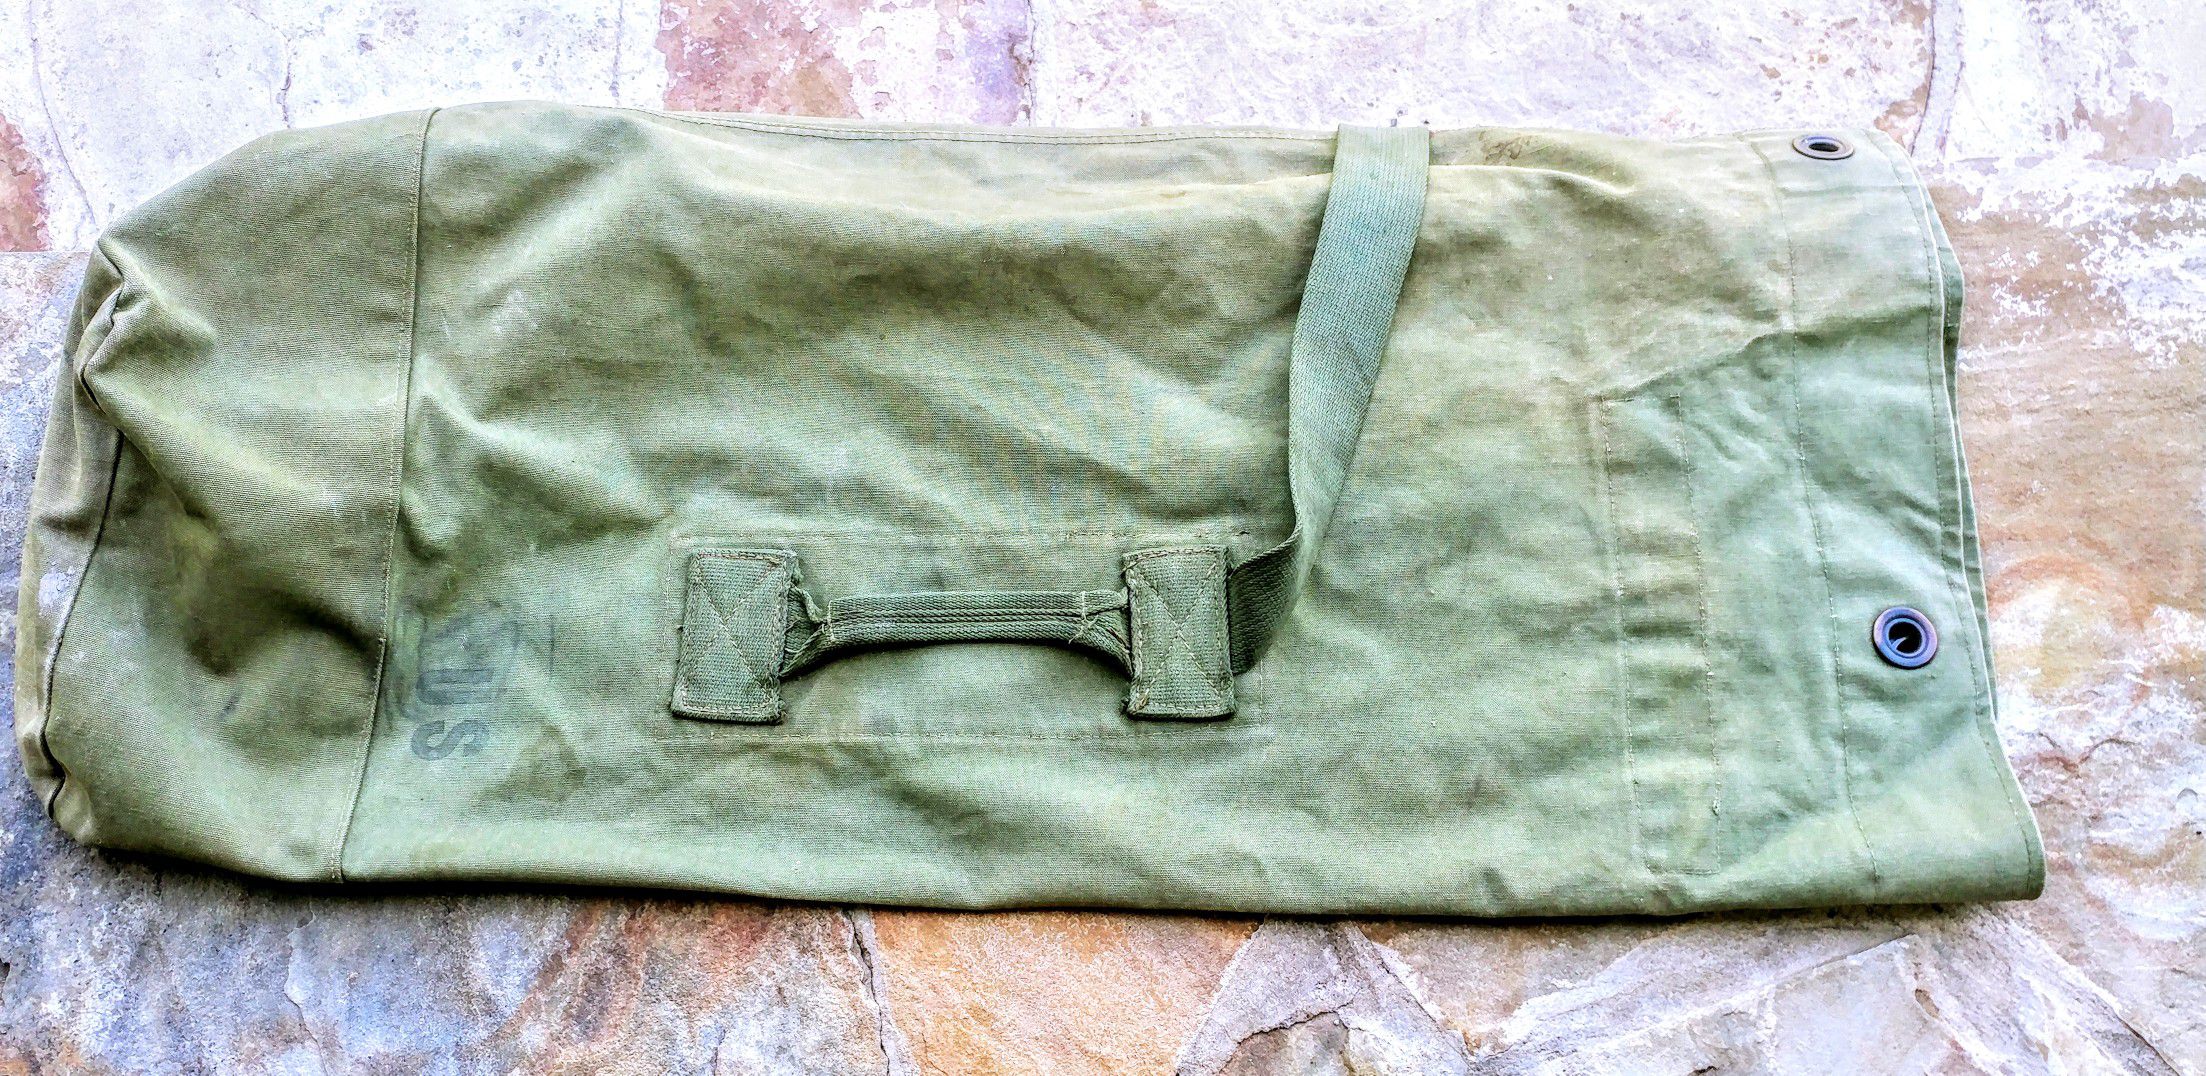 US Military Duffle Bag